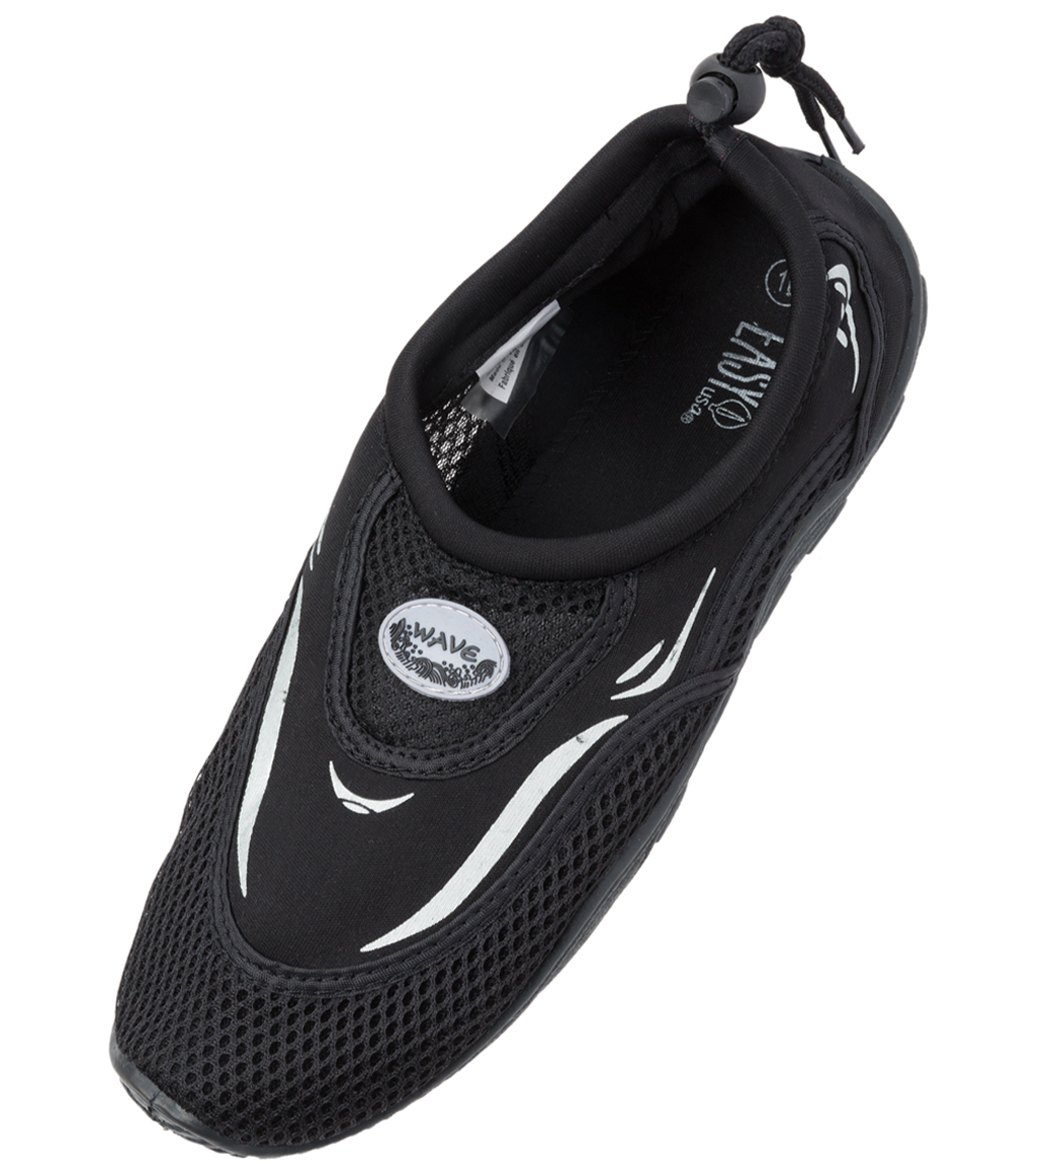 Easy Usa Men's Water Shoes - Black 8 - Swimoutlet.com